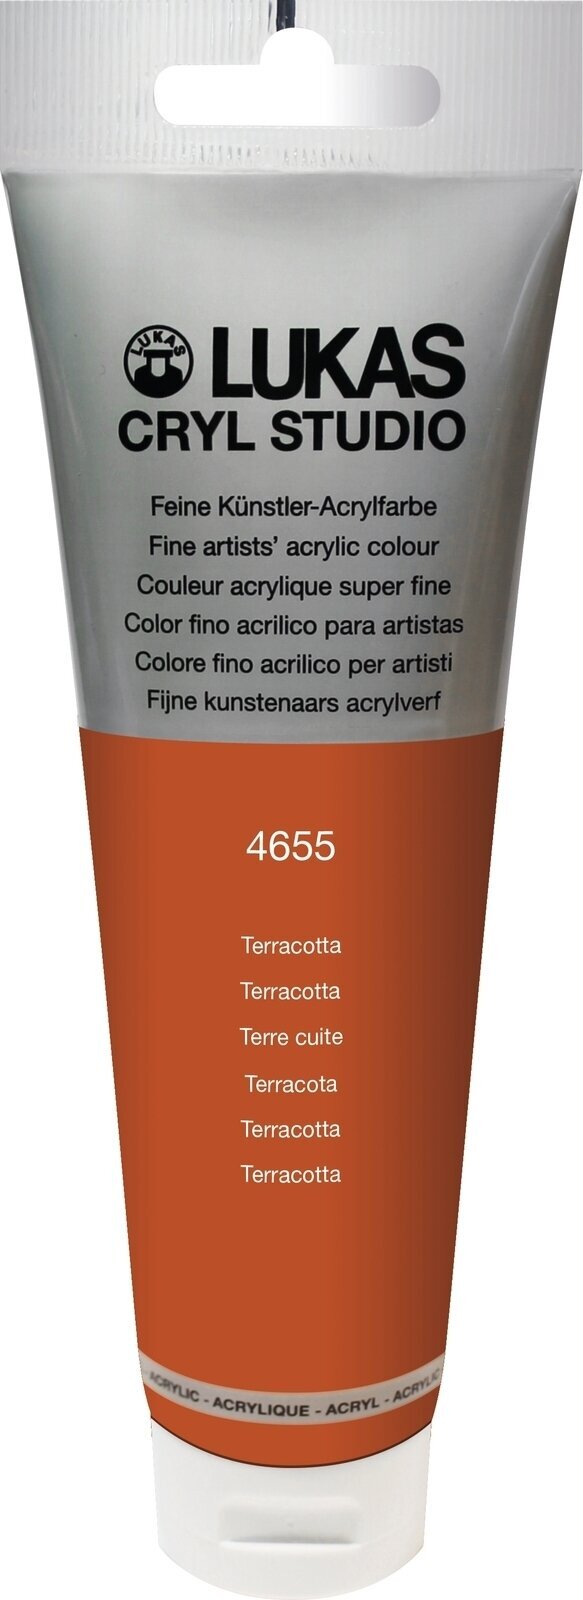 Akrylová farba Lukas Cryl Studio Acrylic Paint Plastic Tube Akrylová farba Terracotta 125 ml 1 ks